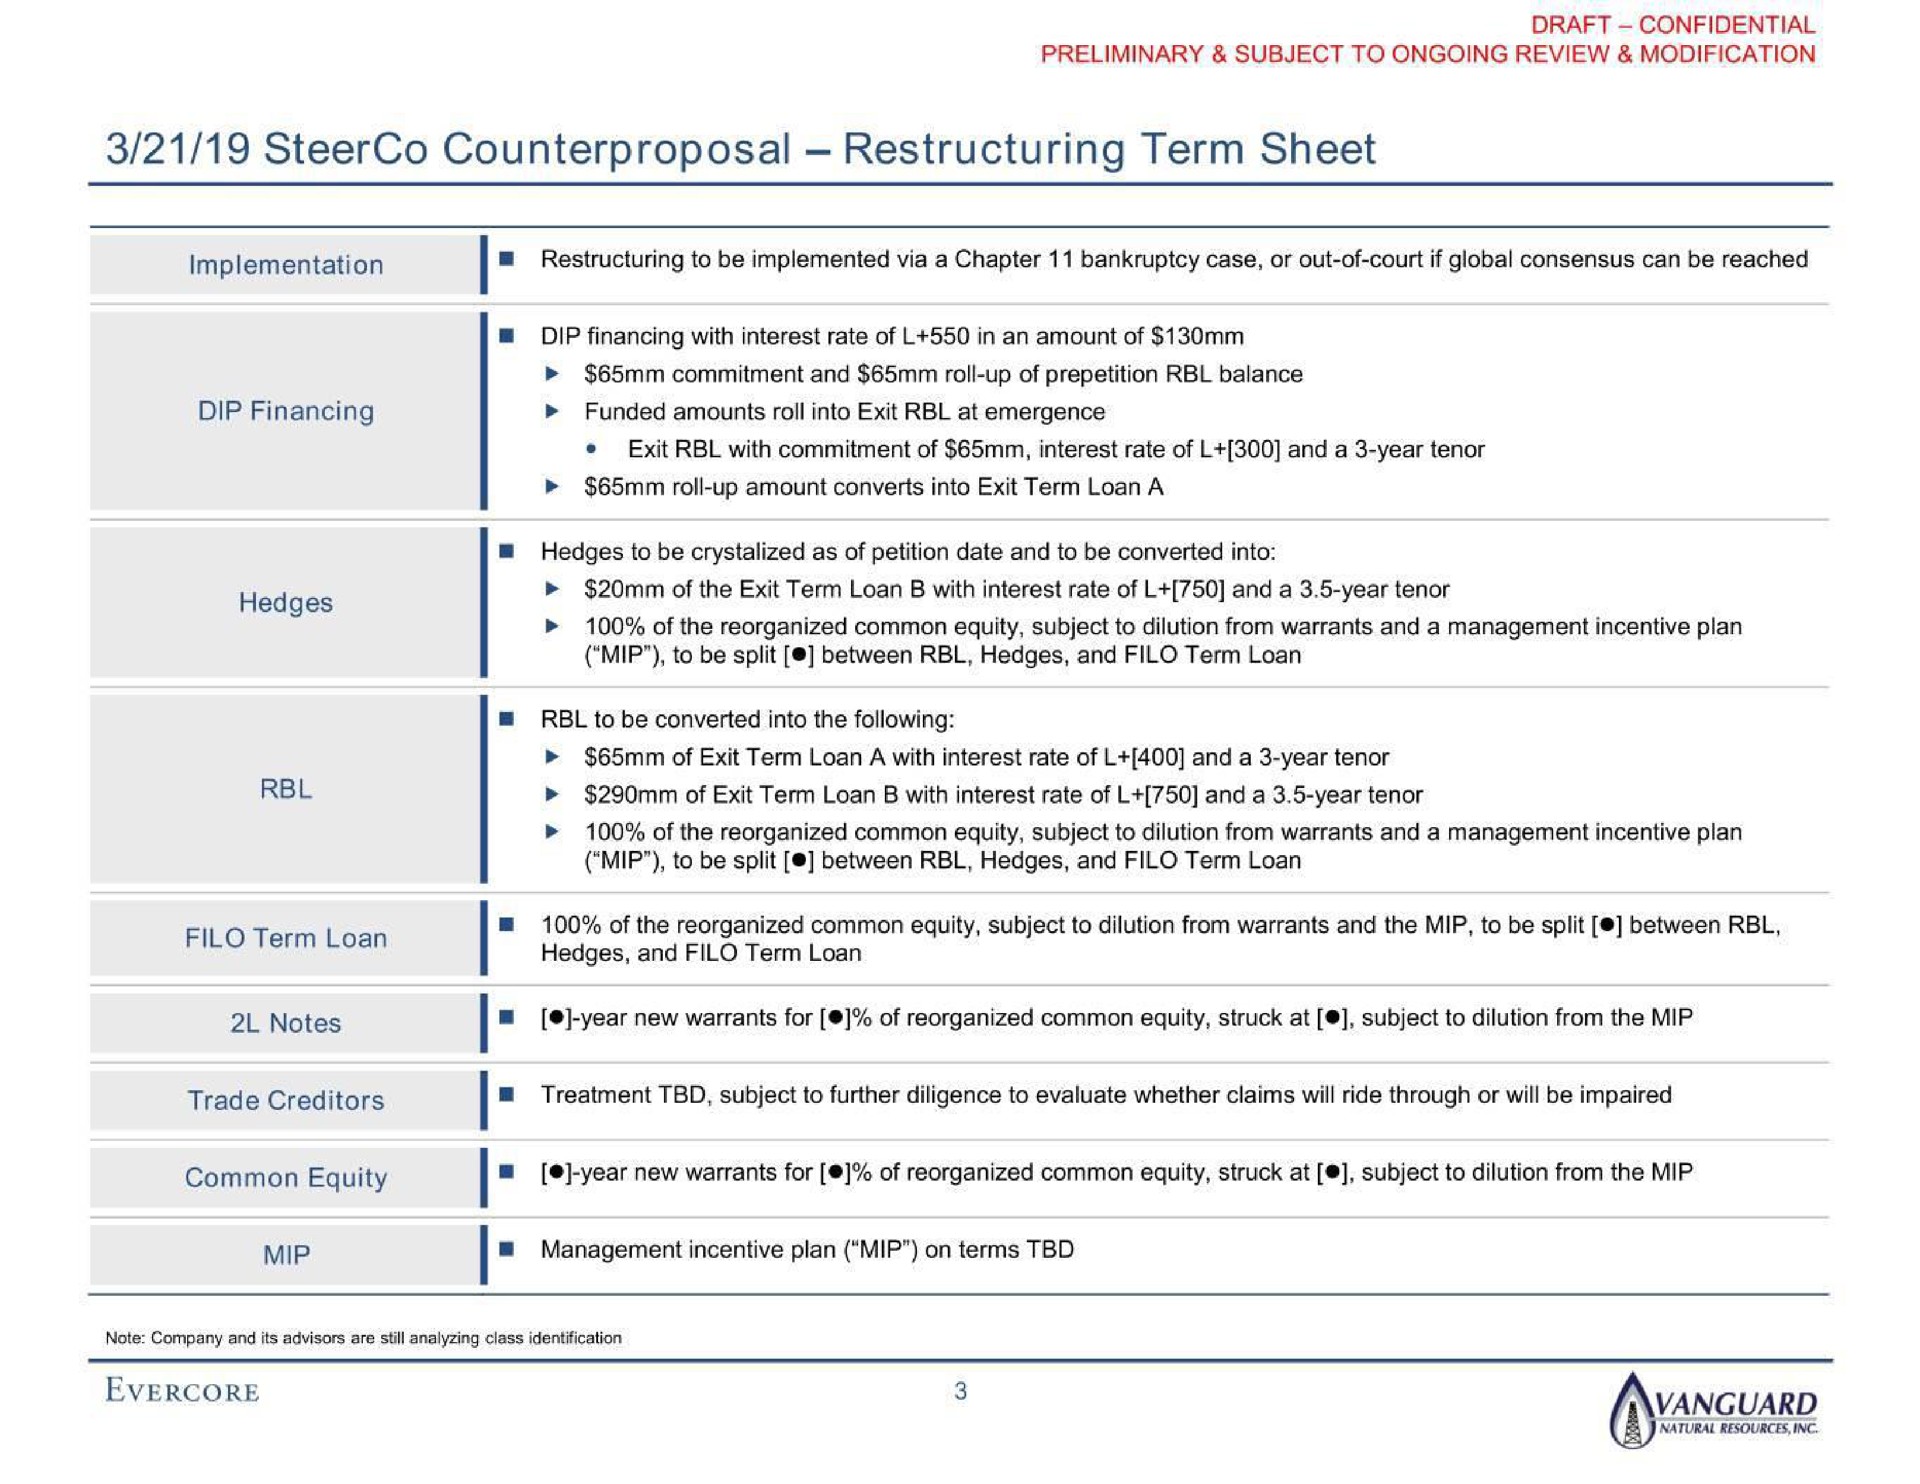 counterproposal term sheet | Evercore